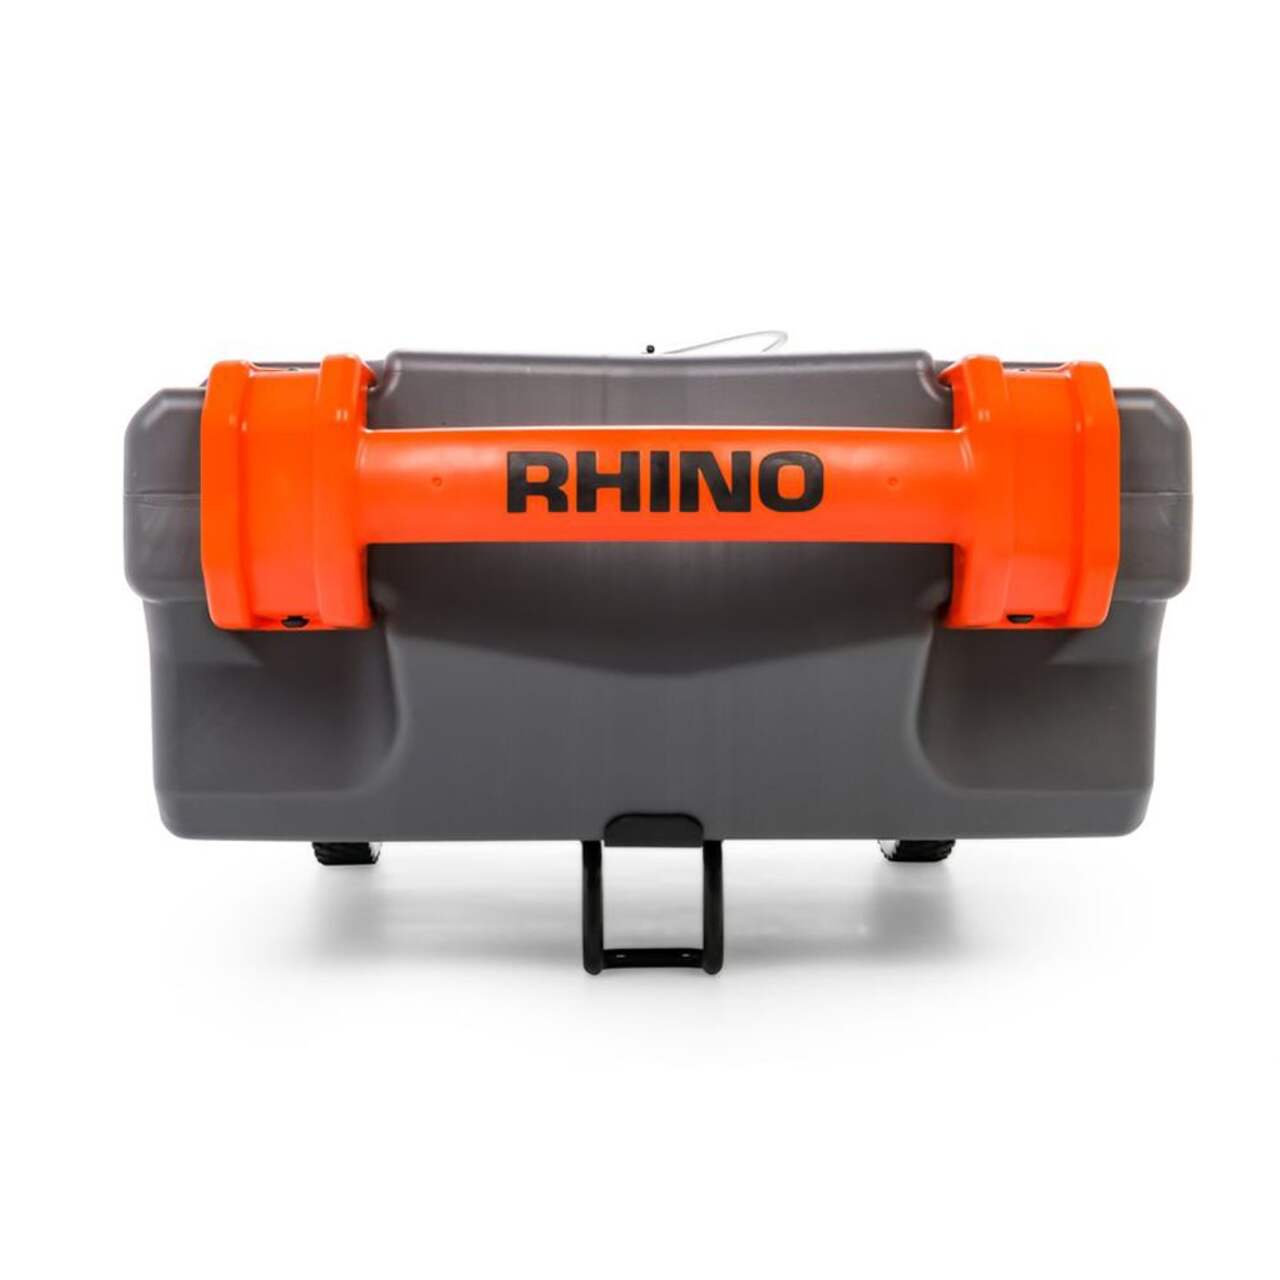 CAMCO 39002 Rhino 21-Gallon RV Portable Waste Holding Tank